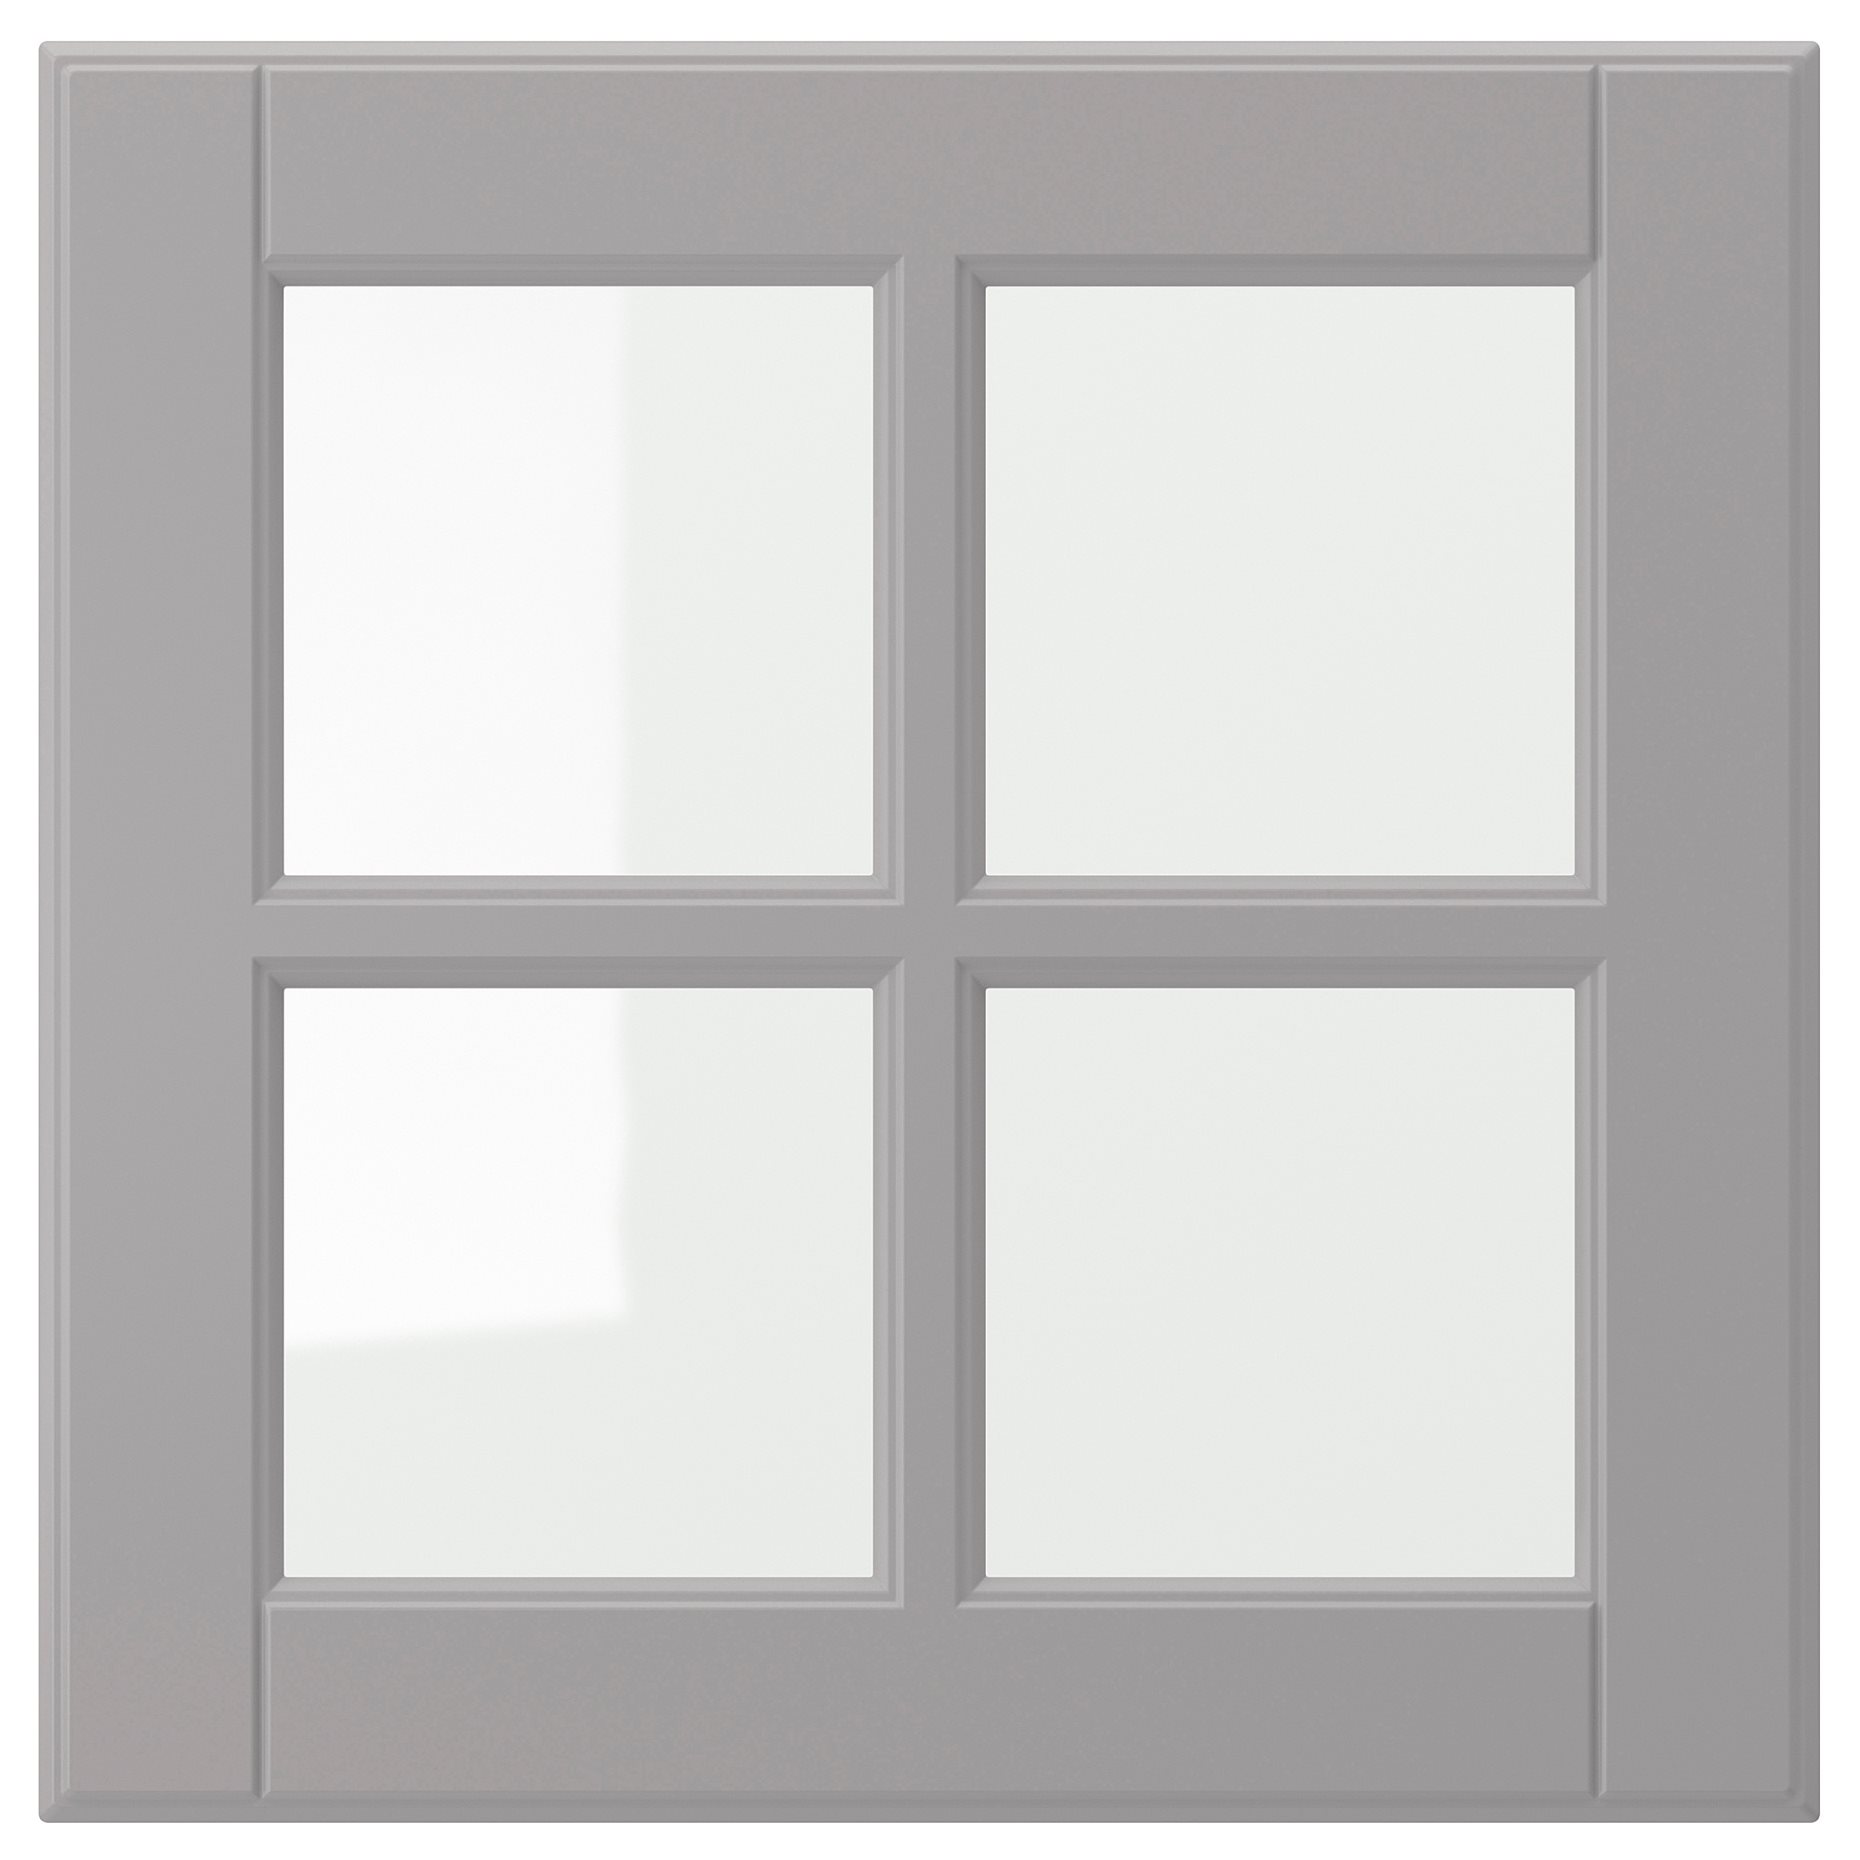 BODBYN, glass door, 40x40 cm, 604.850.42